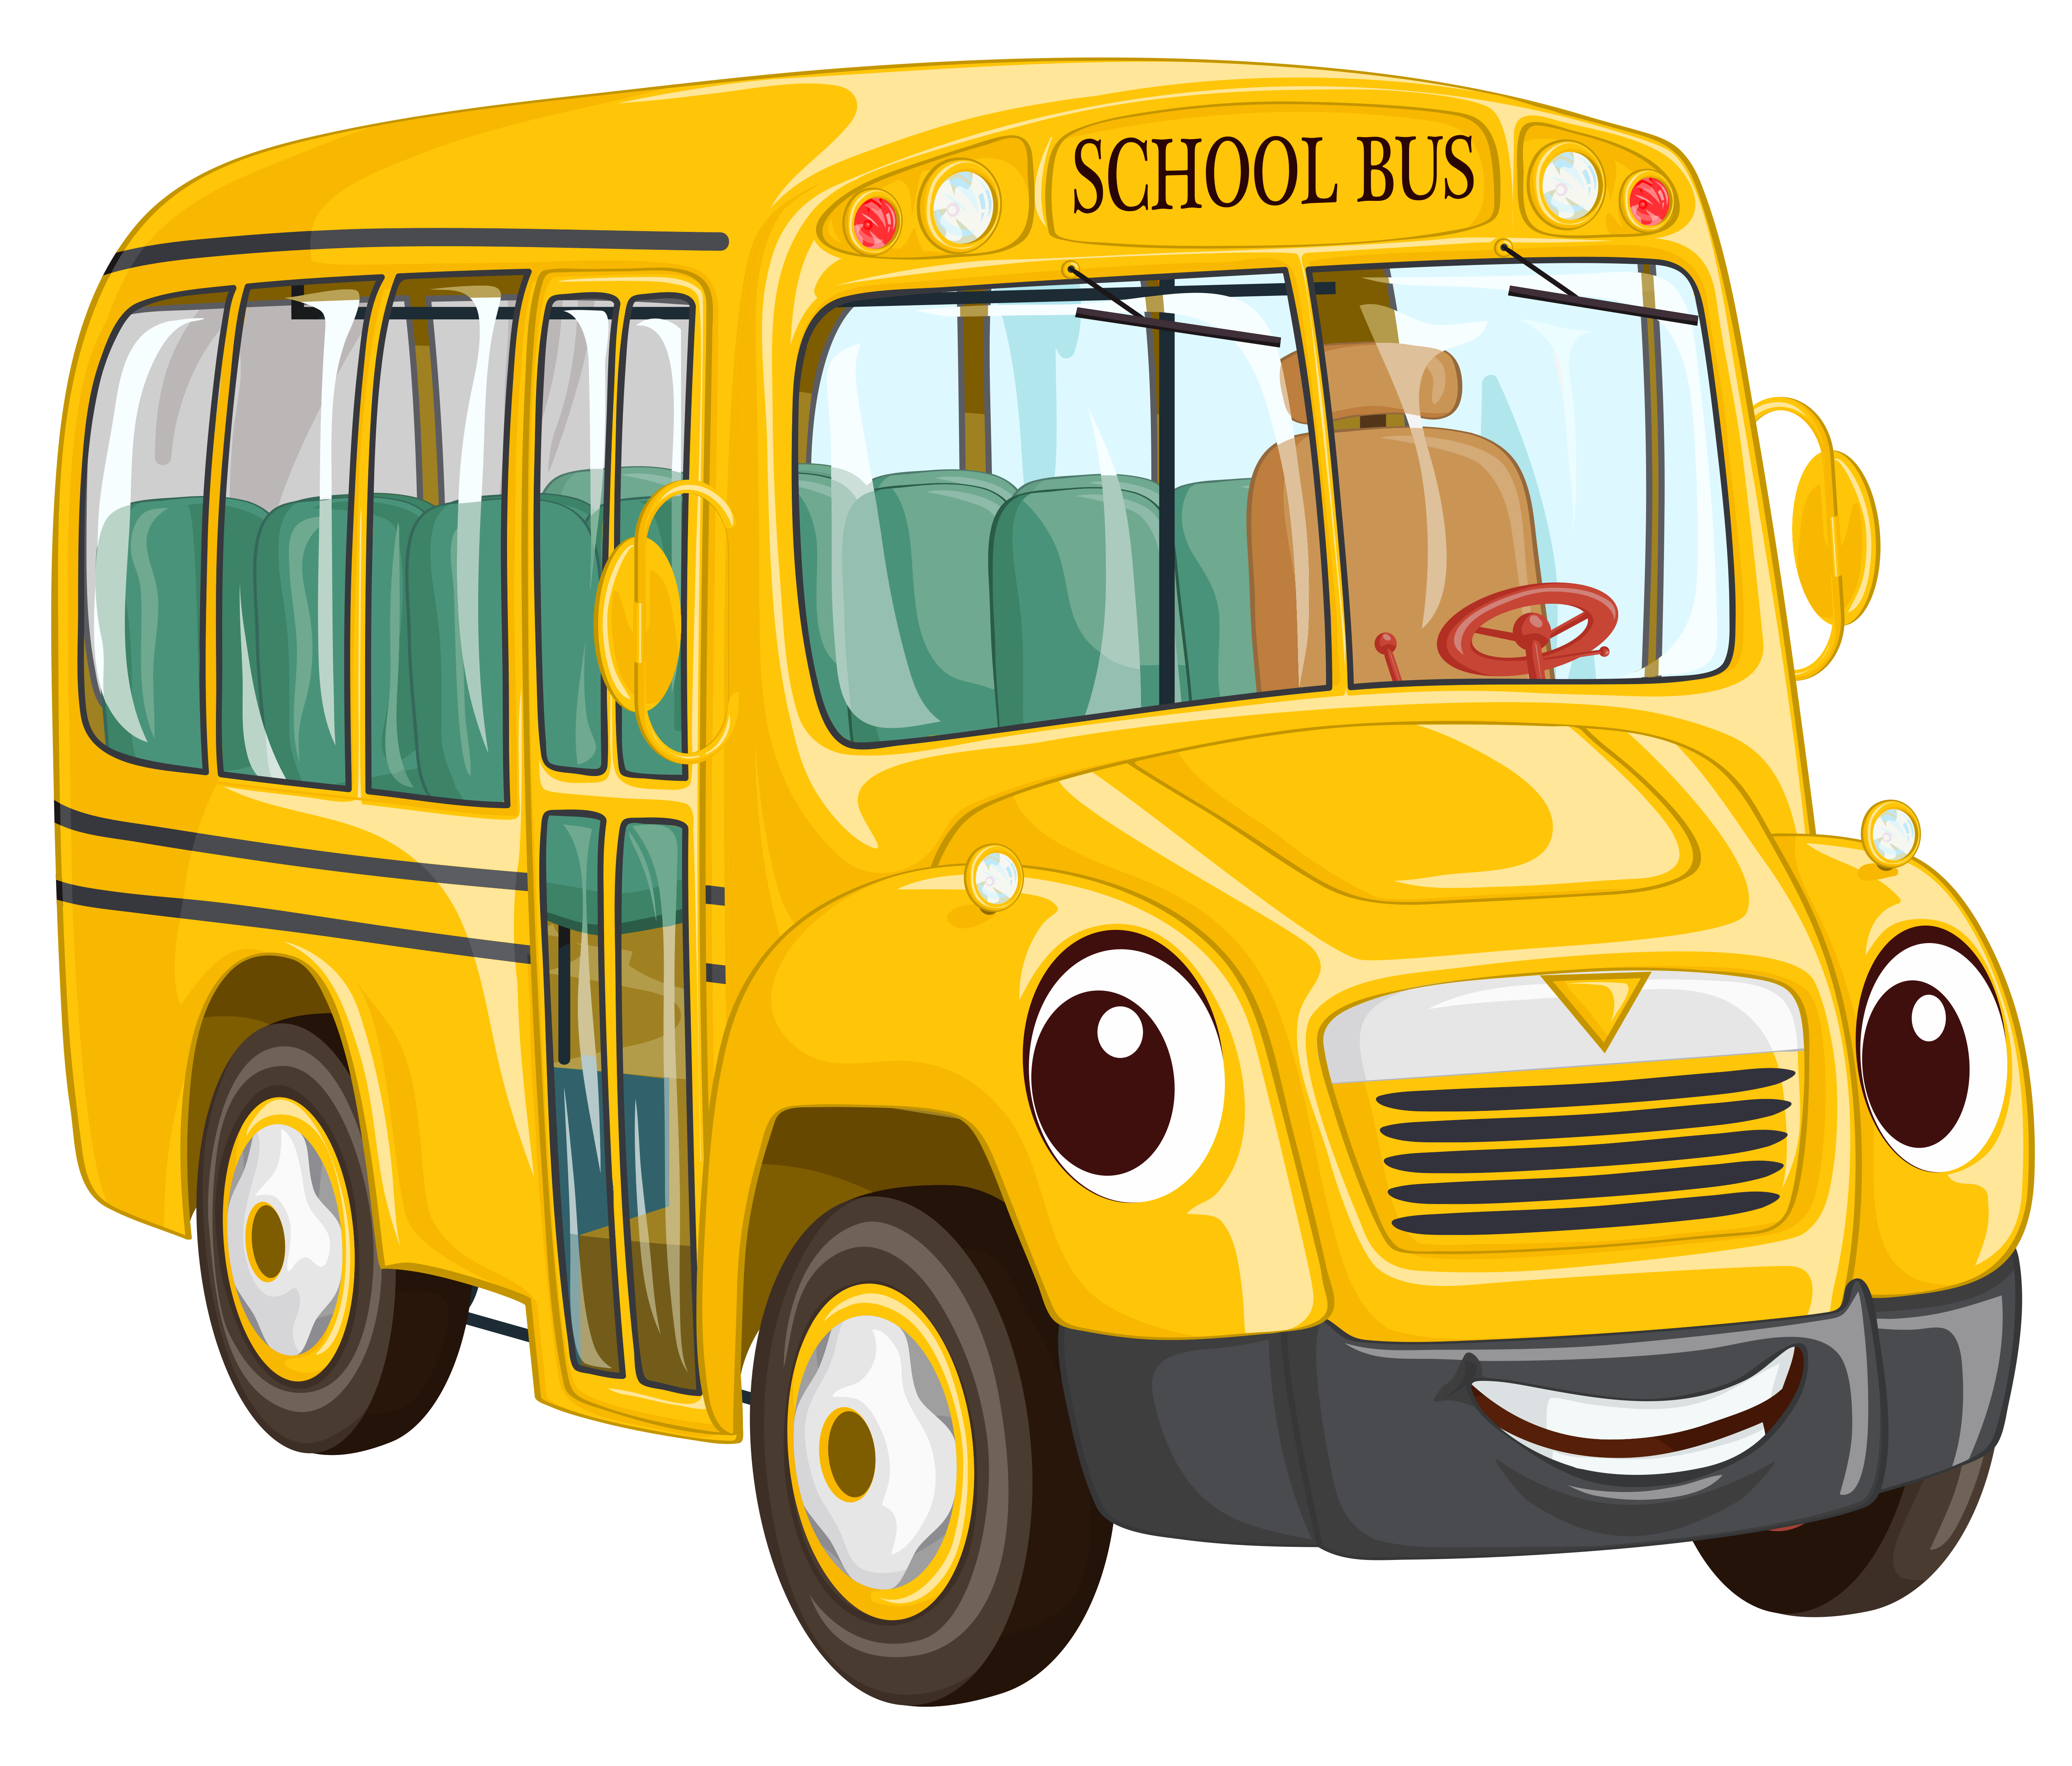 Cartoon School Bus PNG Image Background